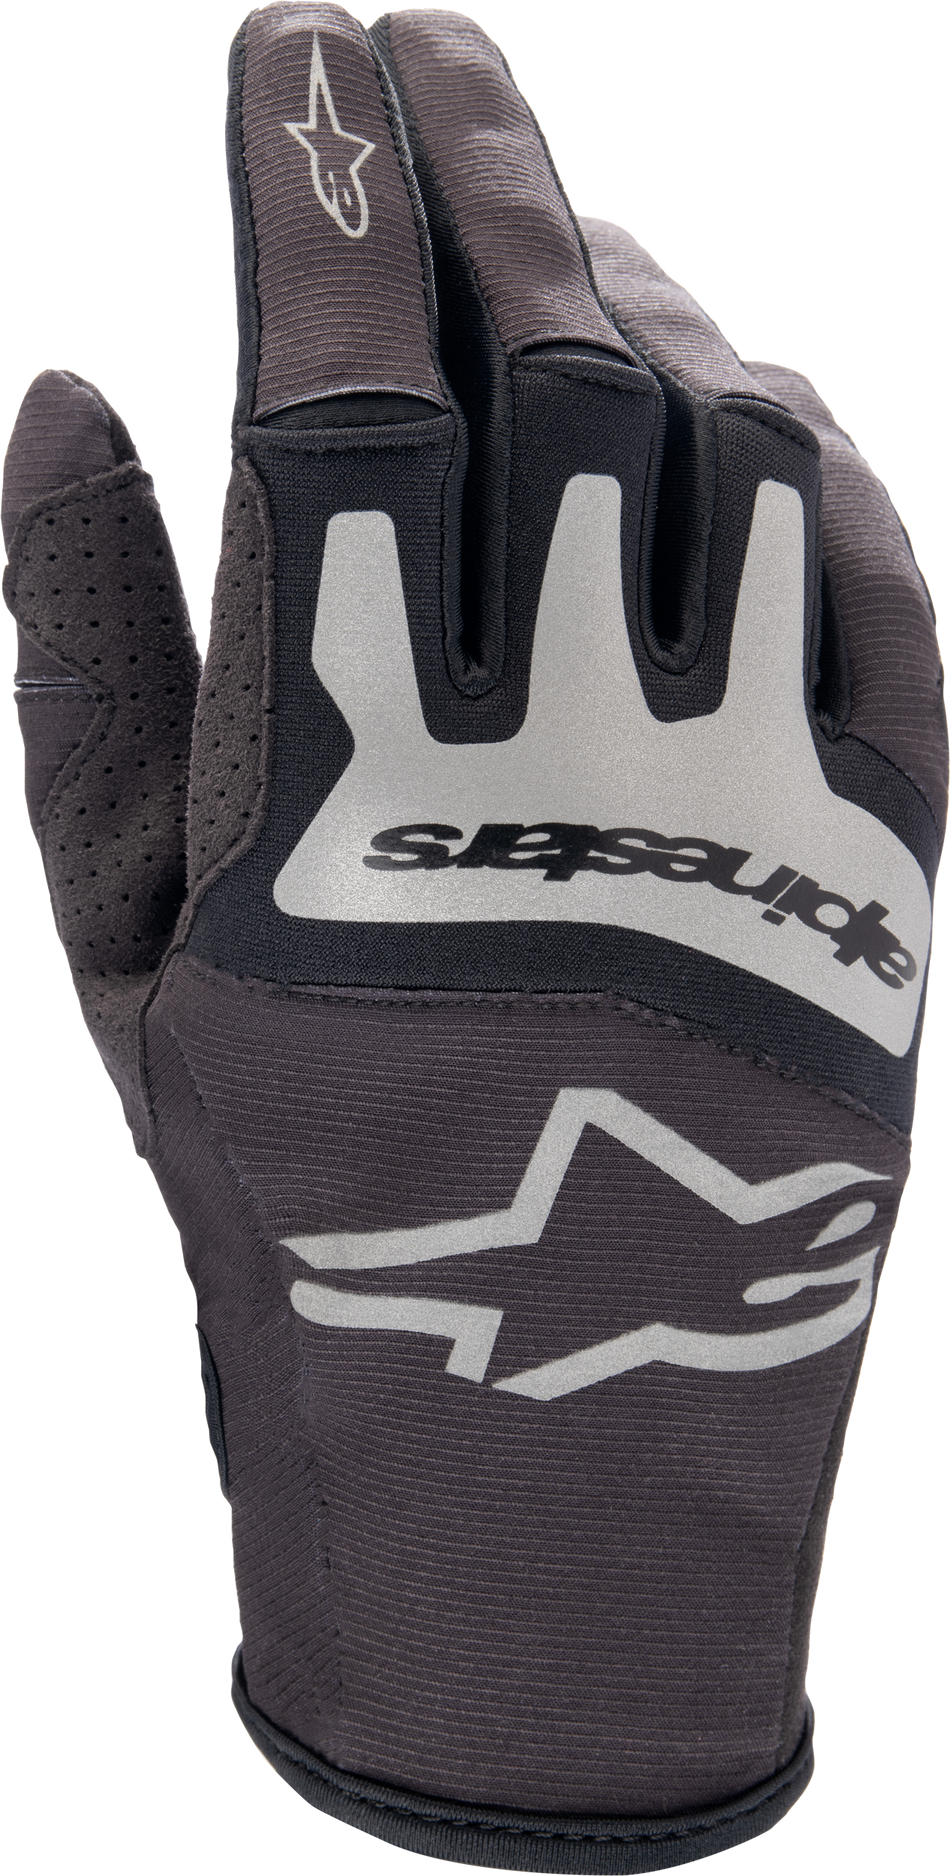 ALPINESTARS Techstar Gloves Black/Brushed Silver Sm 3561023-1419-S